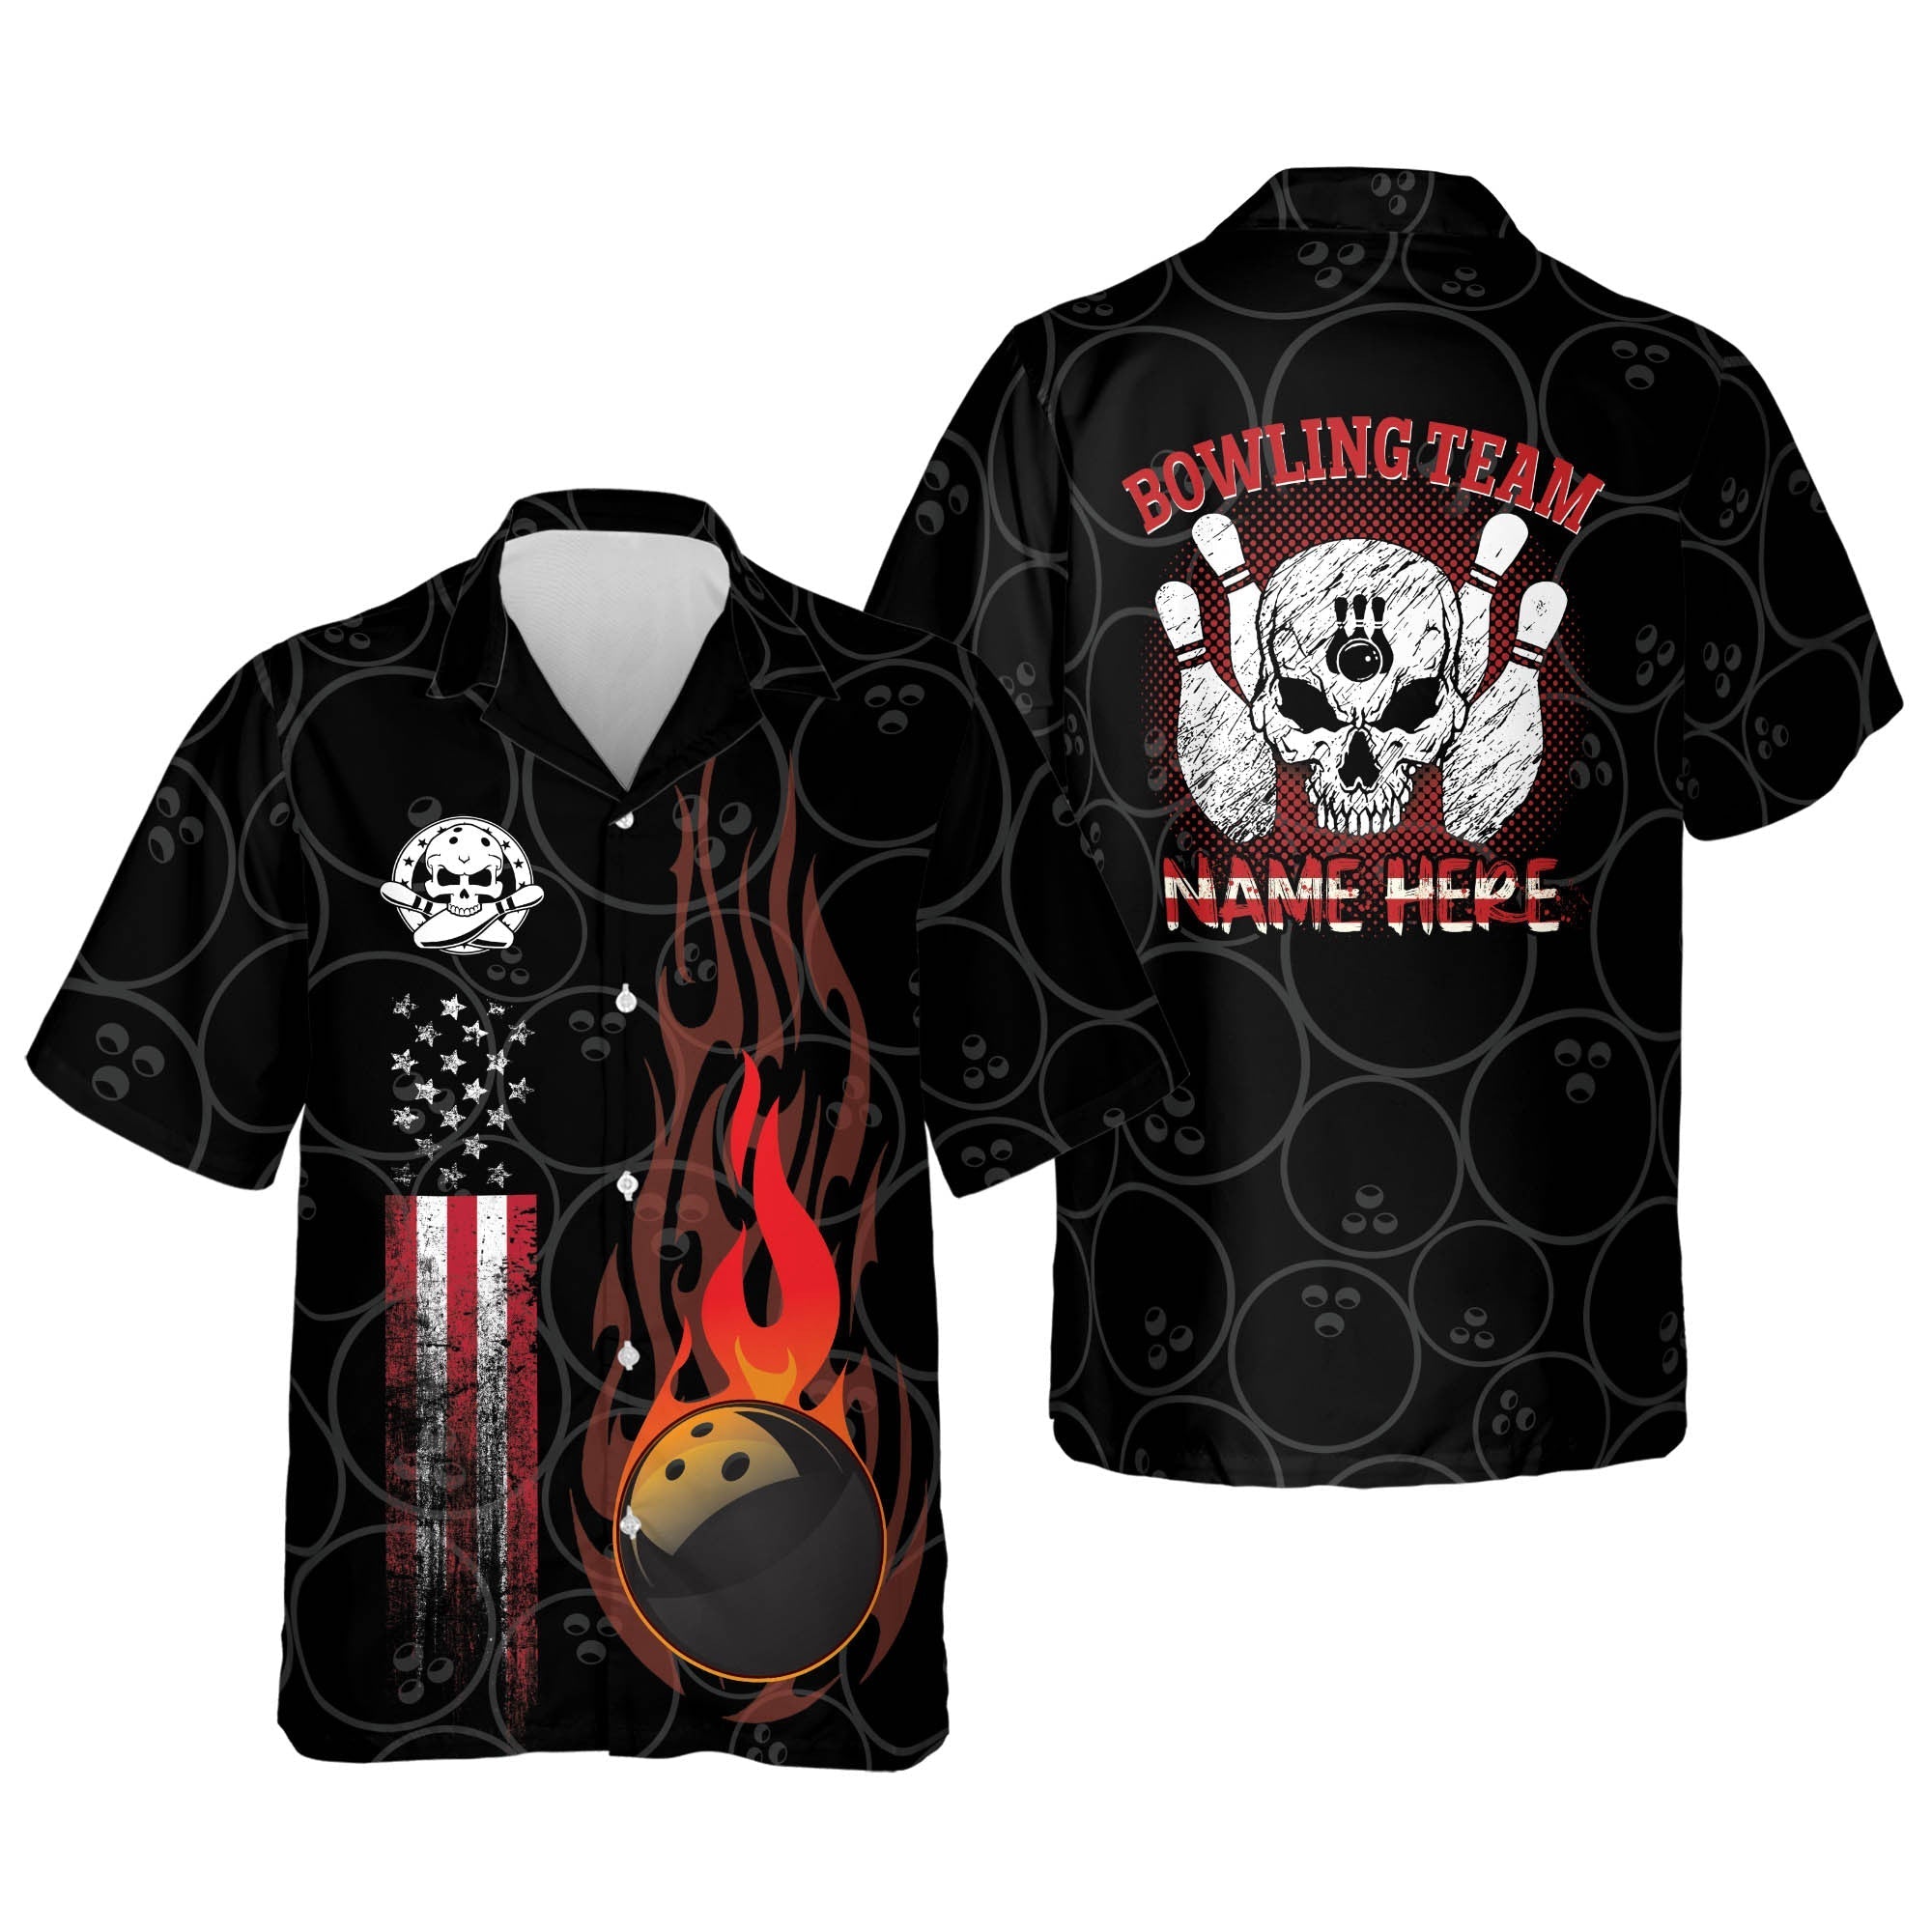 Funny Flame Skull Bowling Team Button-Down Short Sleeve hawaiian shirt for men and women/ Summer gift for Bowling team shirt